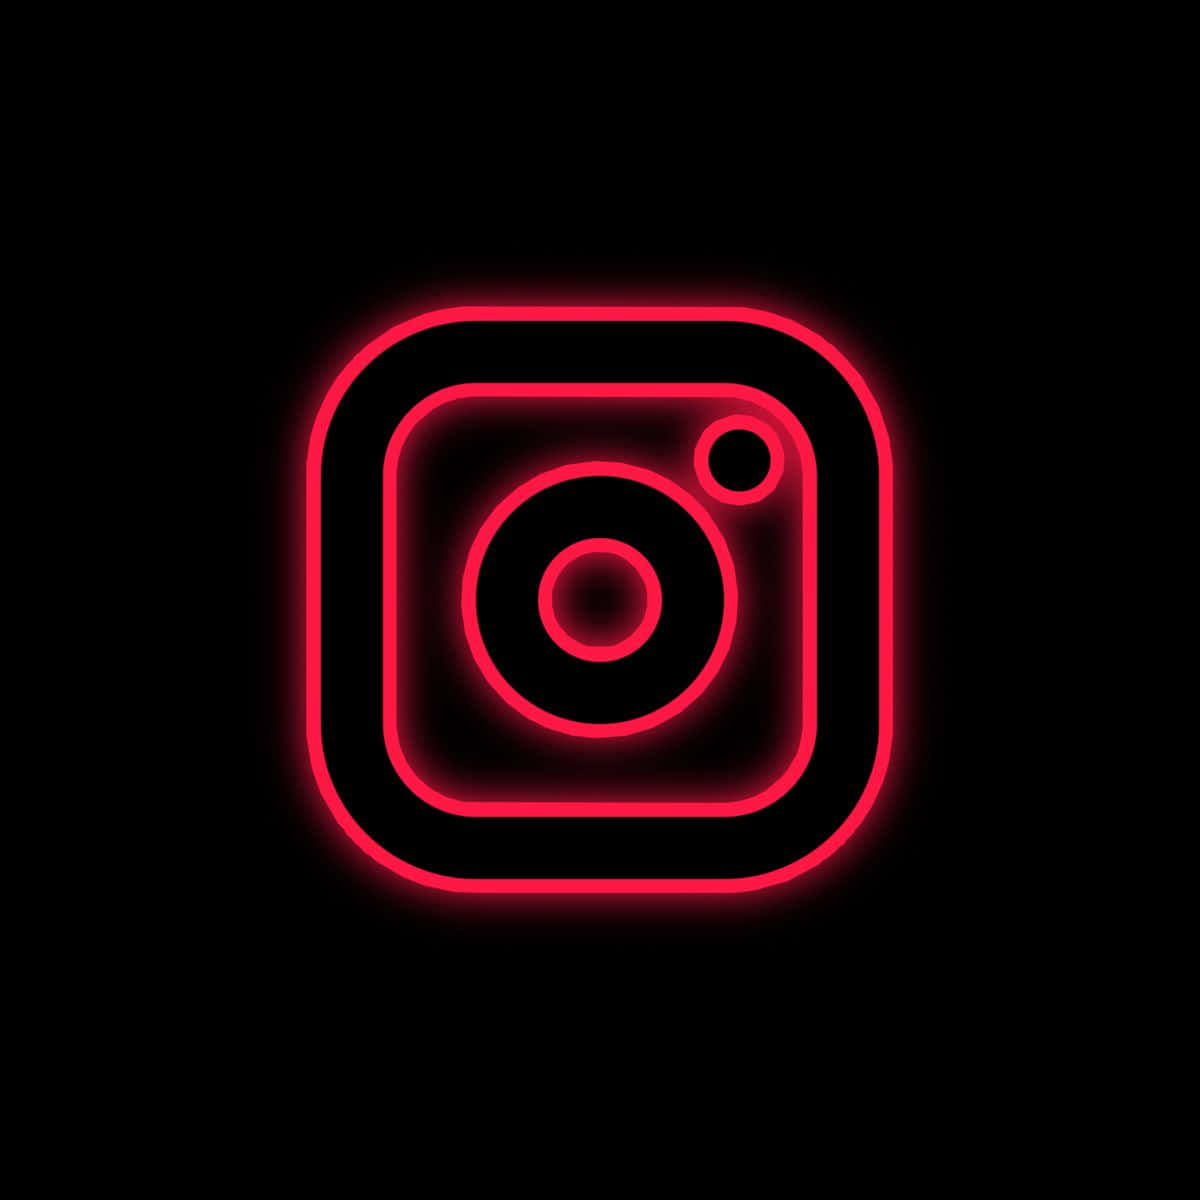 Download Instagram Black Background 1200 X 1200 | Wallpapers.com